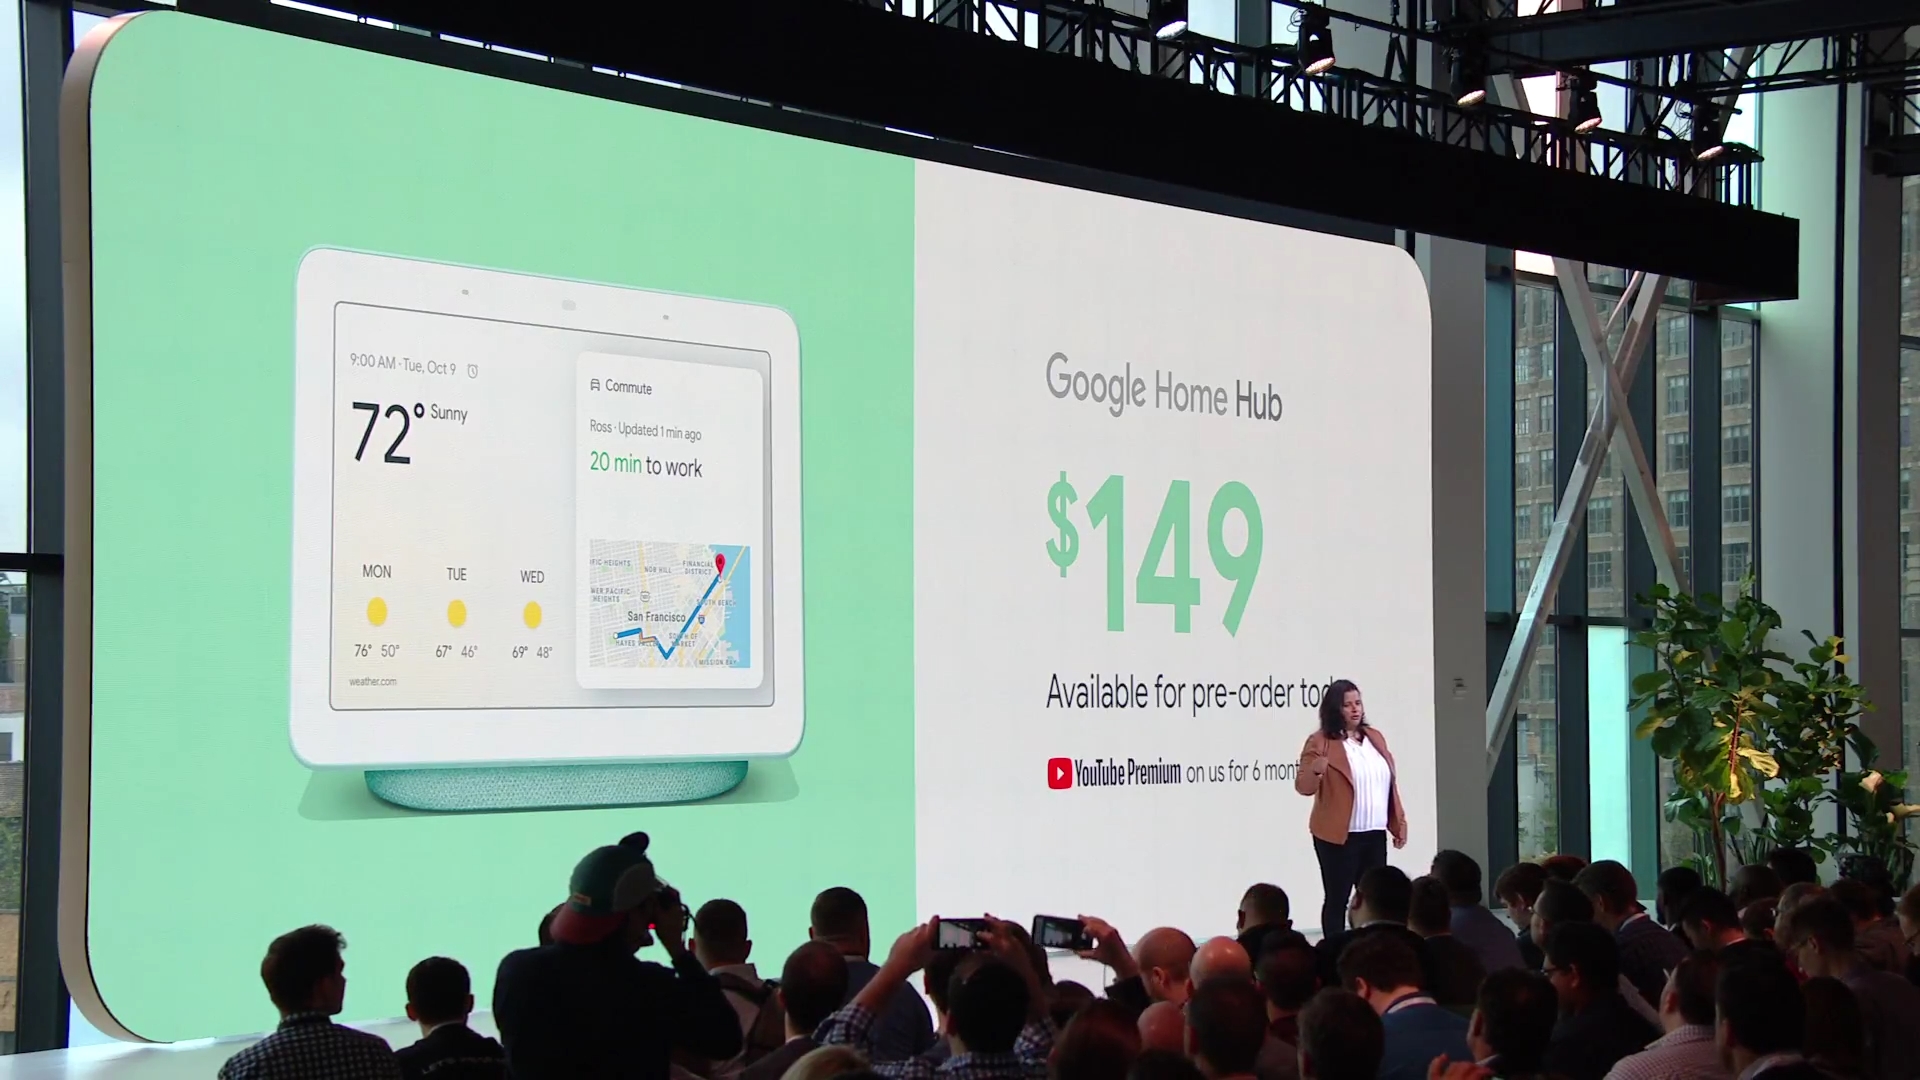 Google Home Hub price